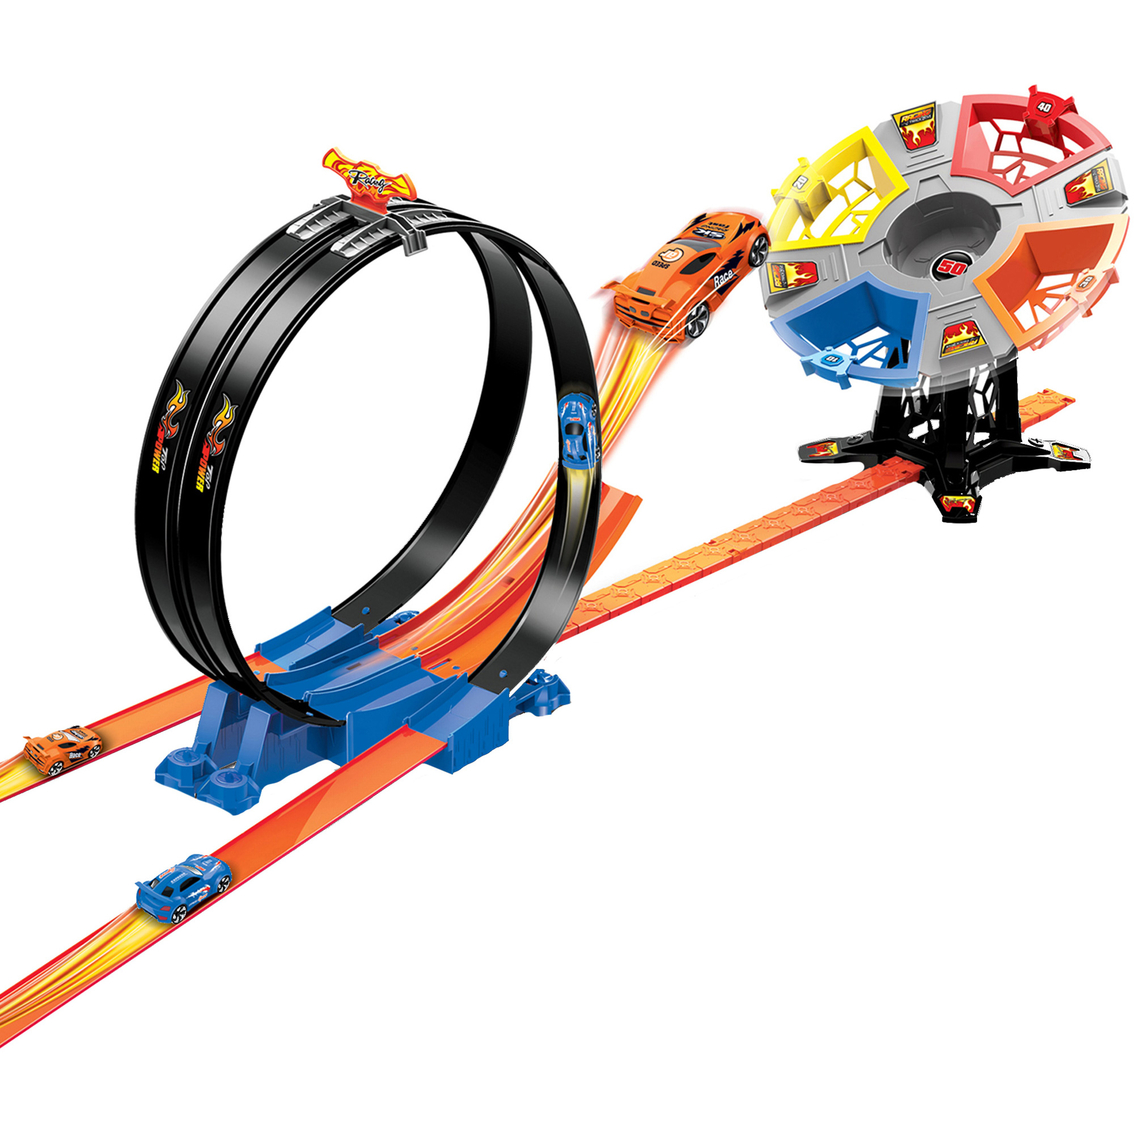 Jupiter Creations Spinforce Target Toy Playset - Image 2 of 3